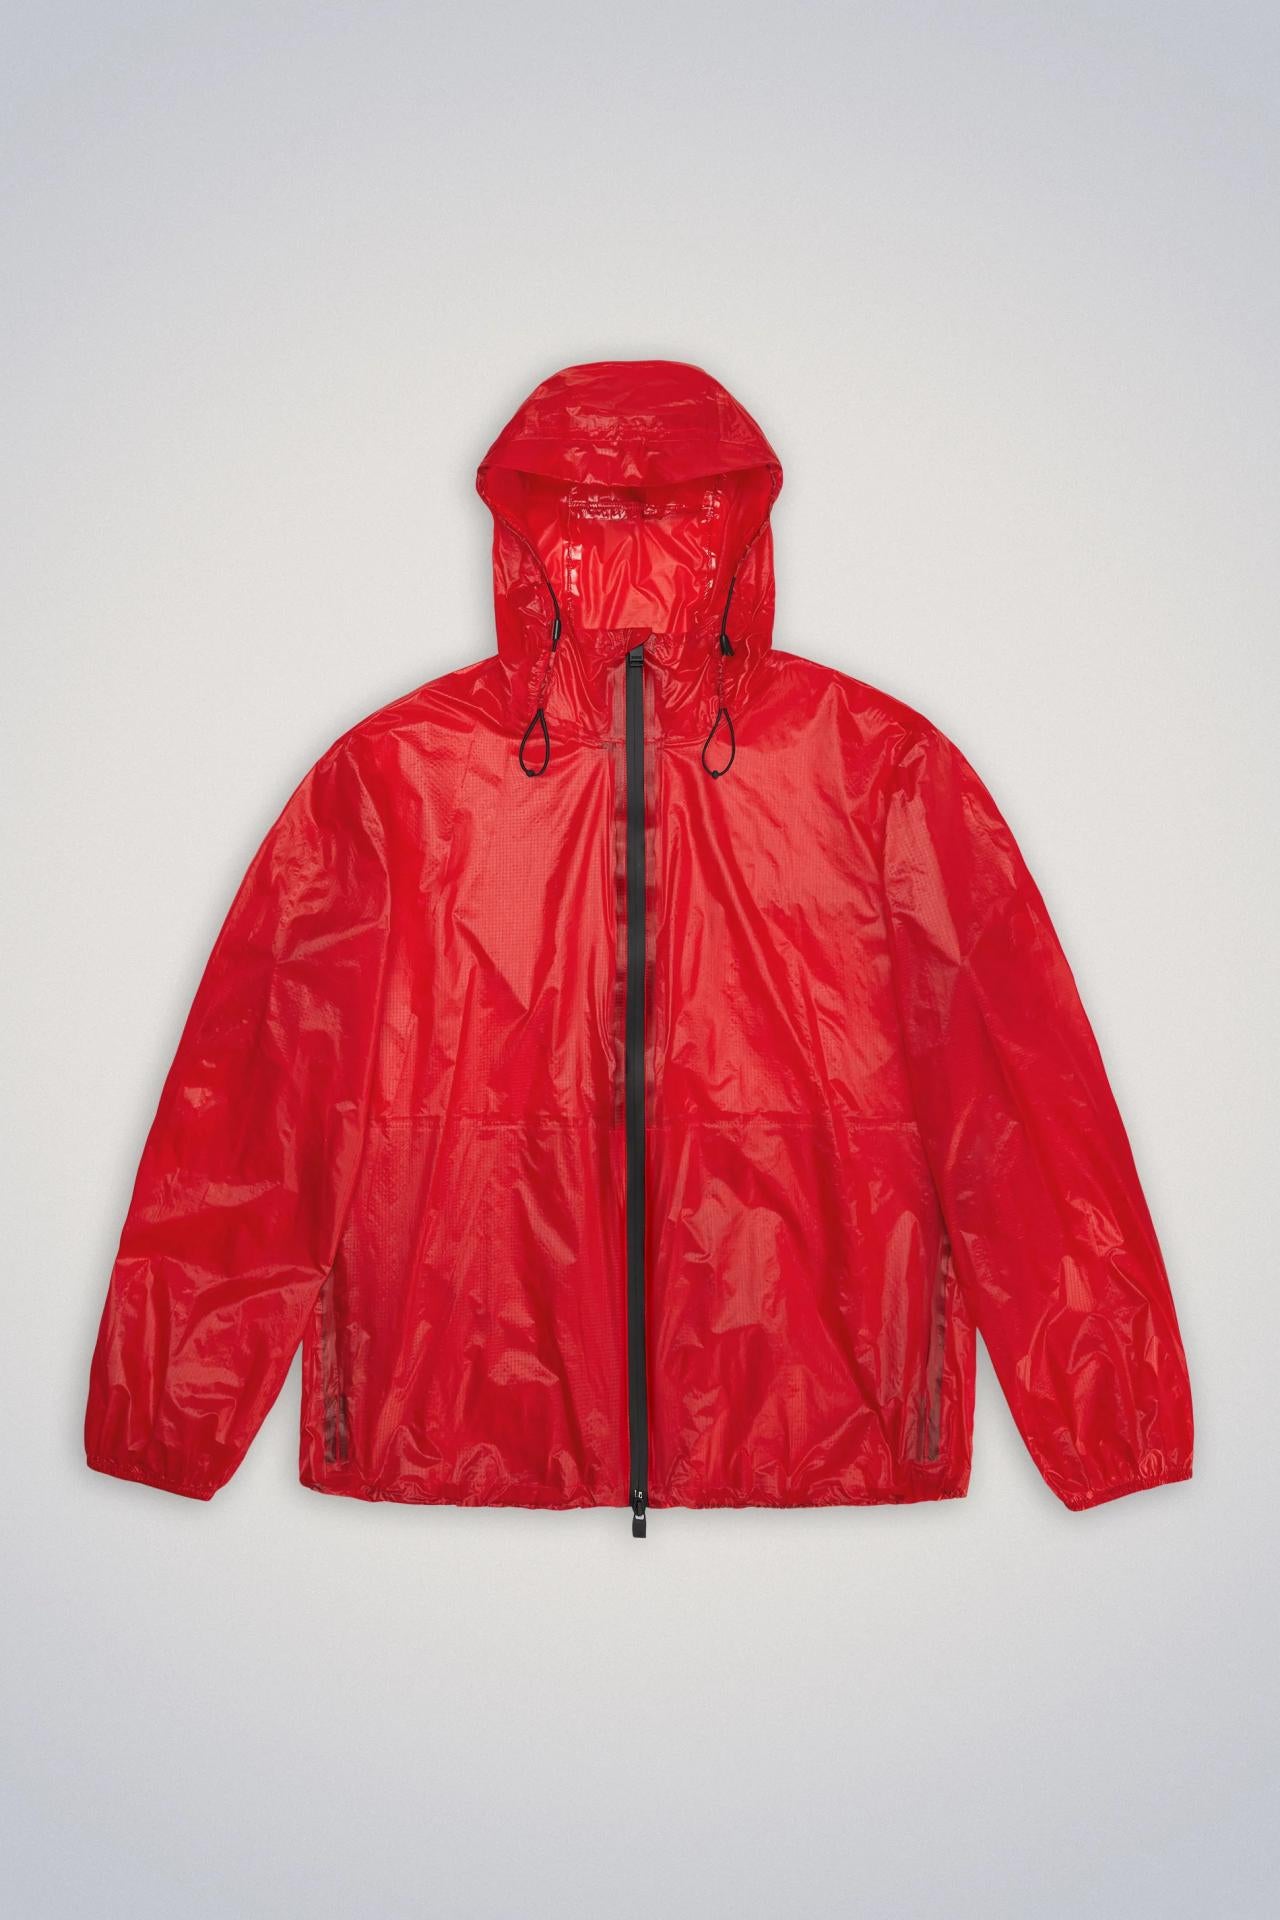 Rains Norton Regenjacke Rain Jacket W3 - Farbe: 12 Fire - Variante: L